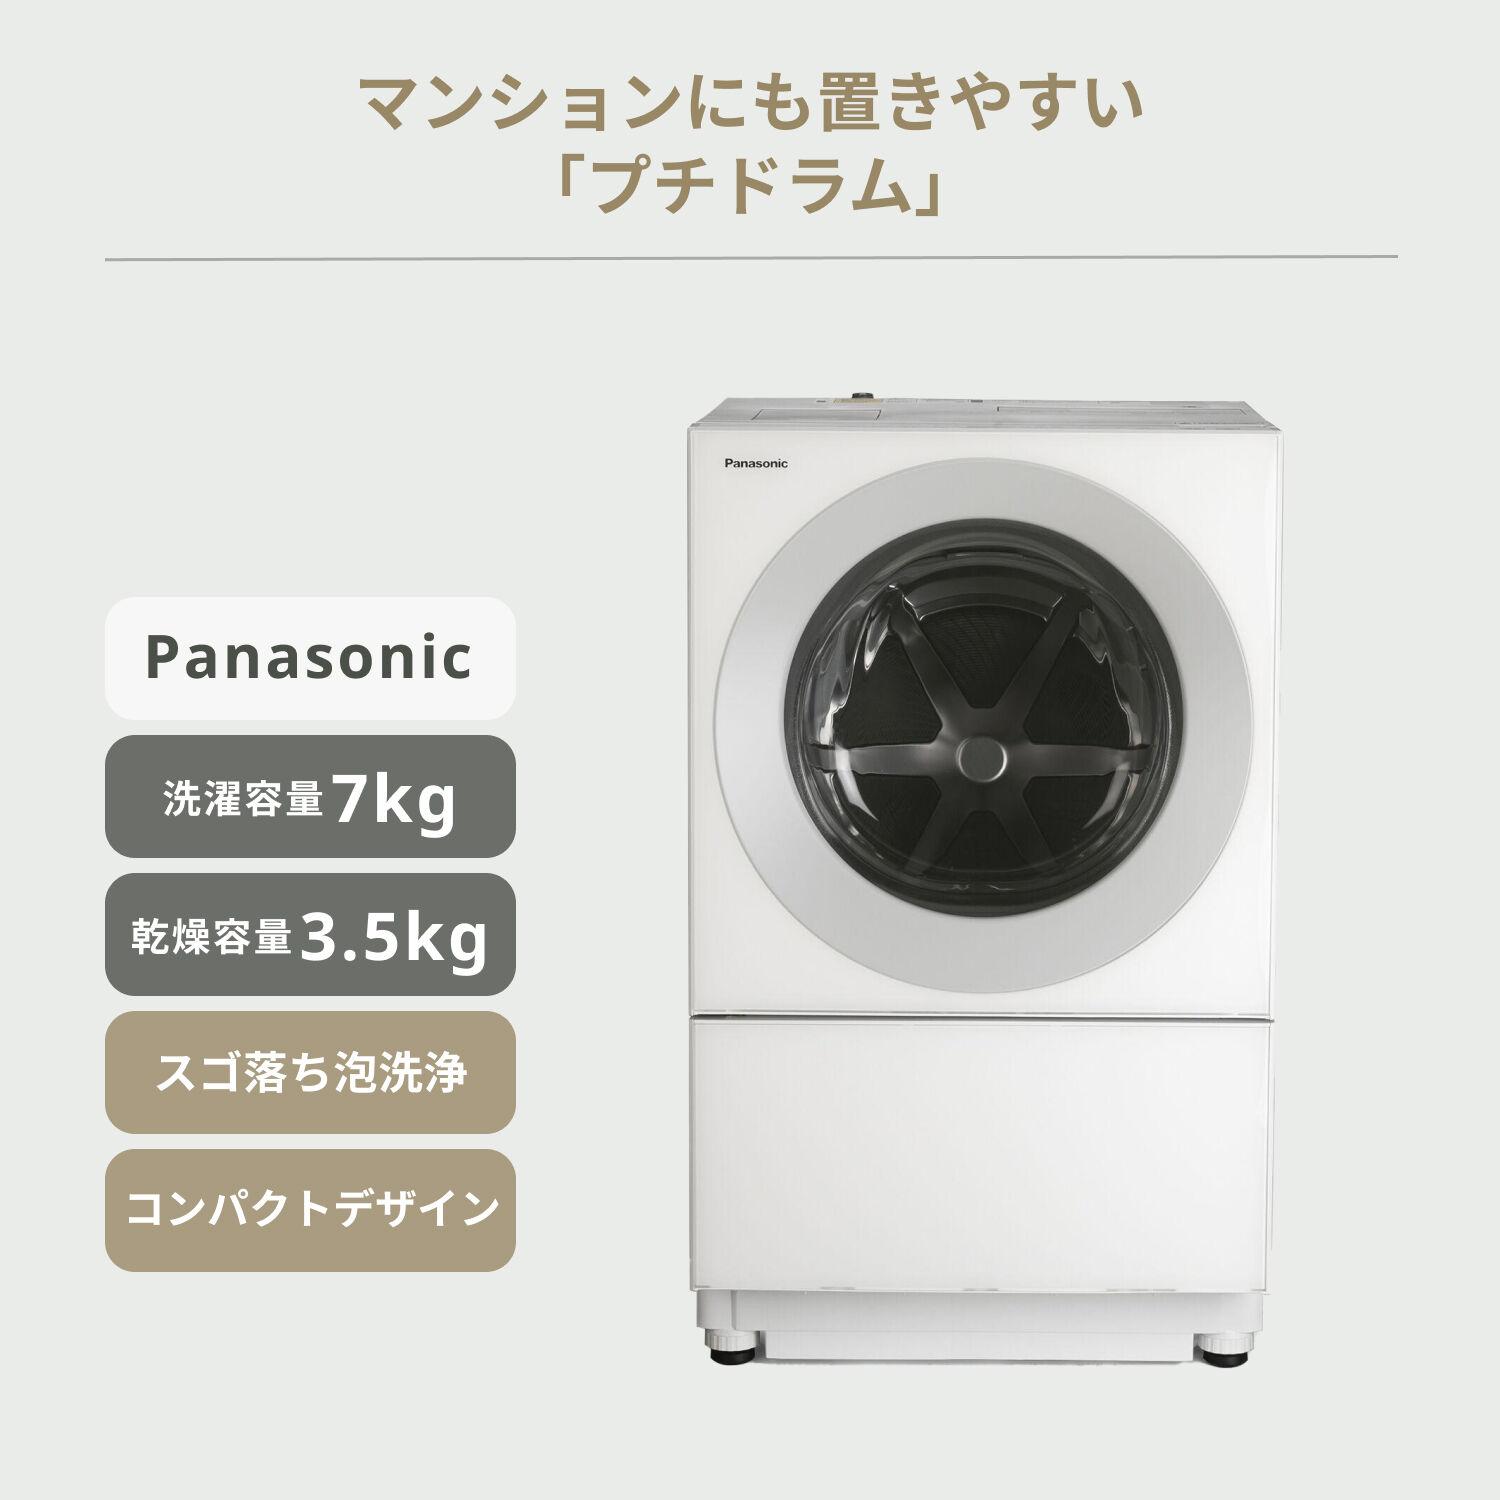 Panasonic コンパクトドラム式洗濯乾燥機 Cuble【洗濯7kg/乾燥3.5kg 